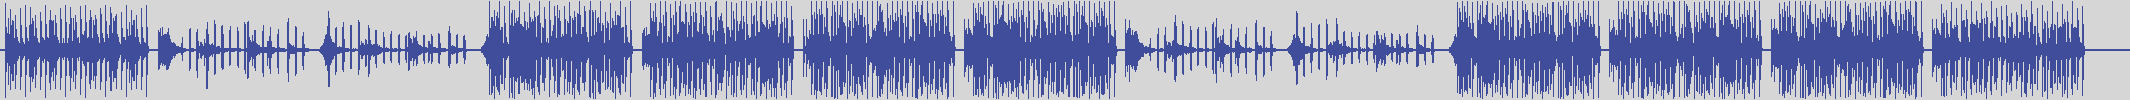 nf_boyz_records [NFY076] Long Island Ensemble - The Foundation [Jeff Kambusa's Deep Mix] audio wave form